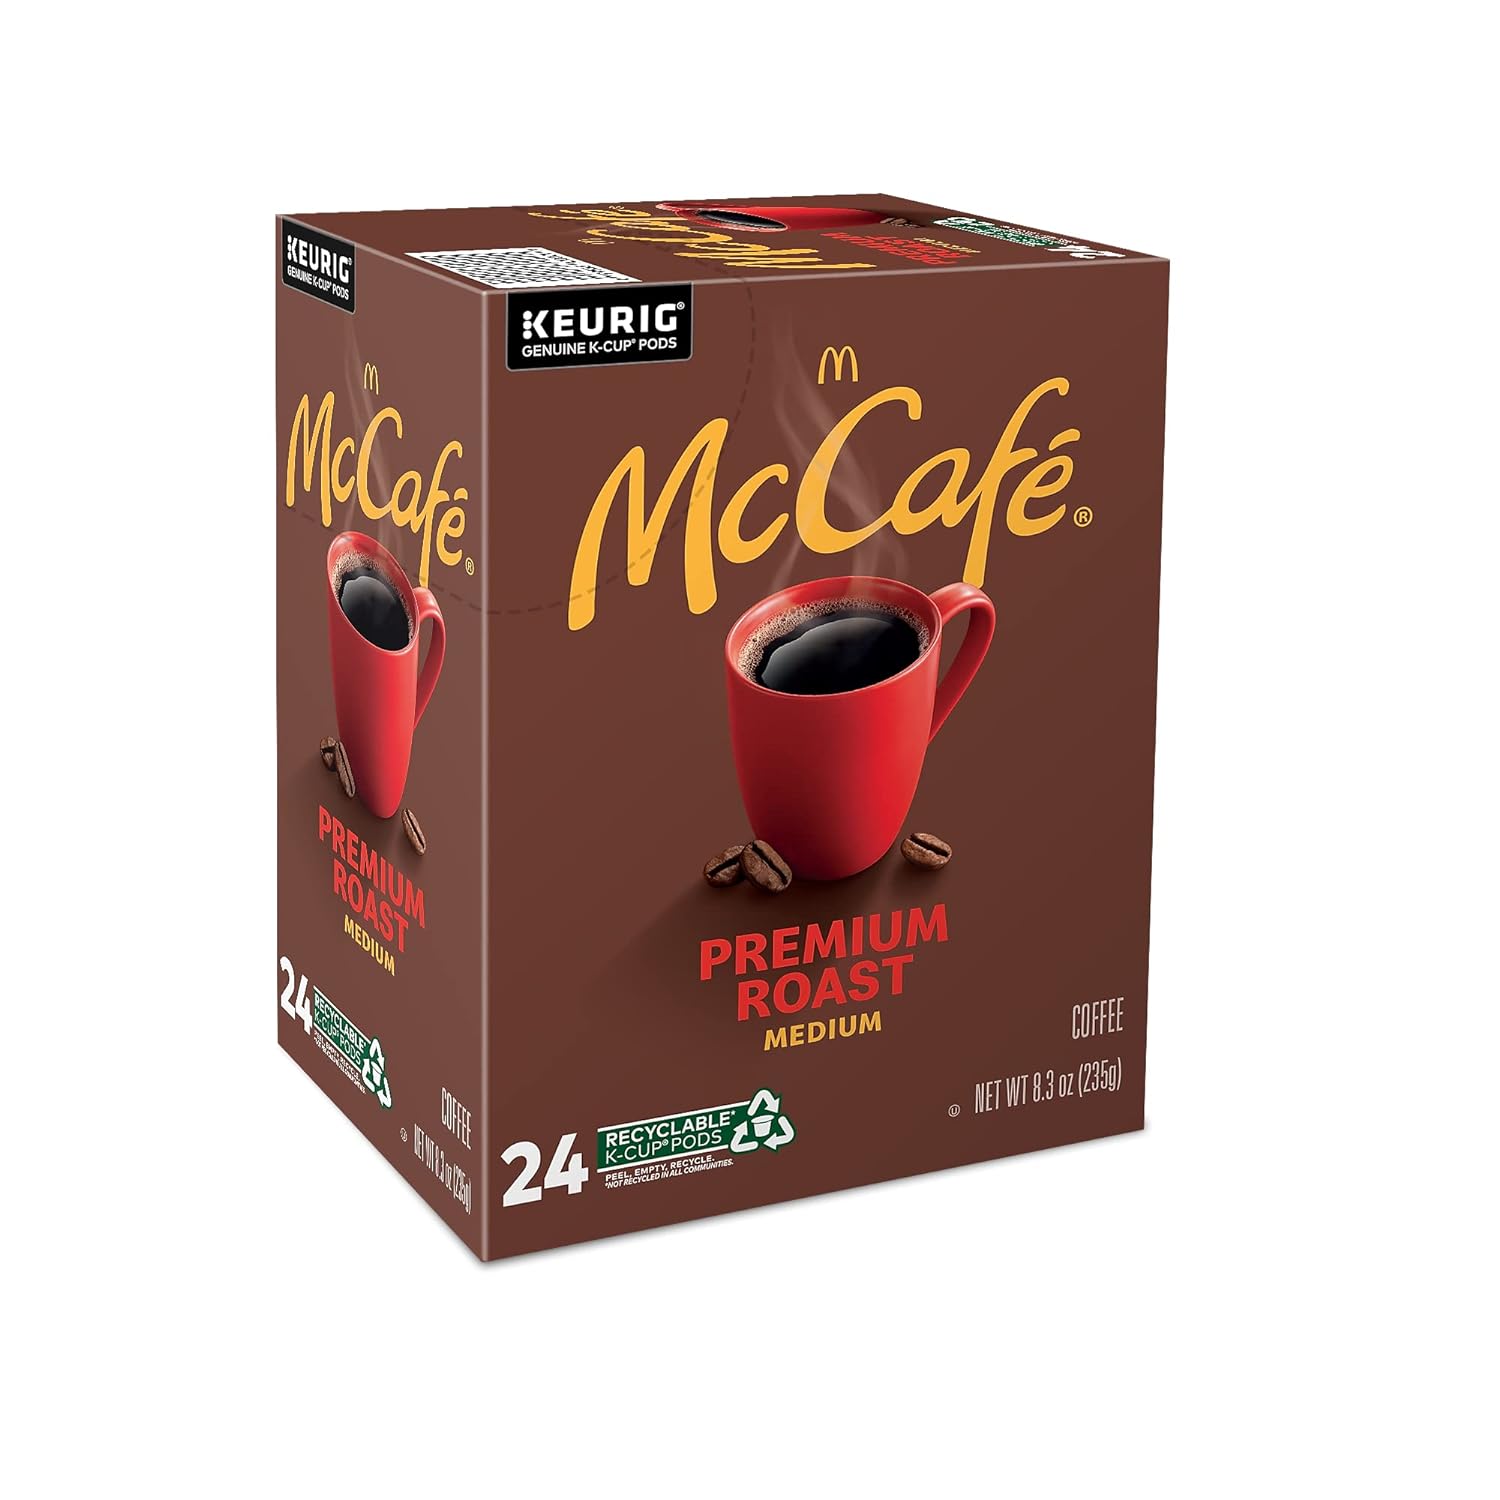 McCafe Premium Roast K-Cup, 24/bx